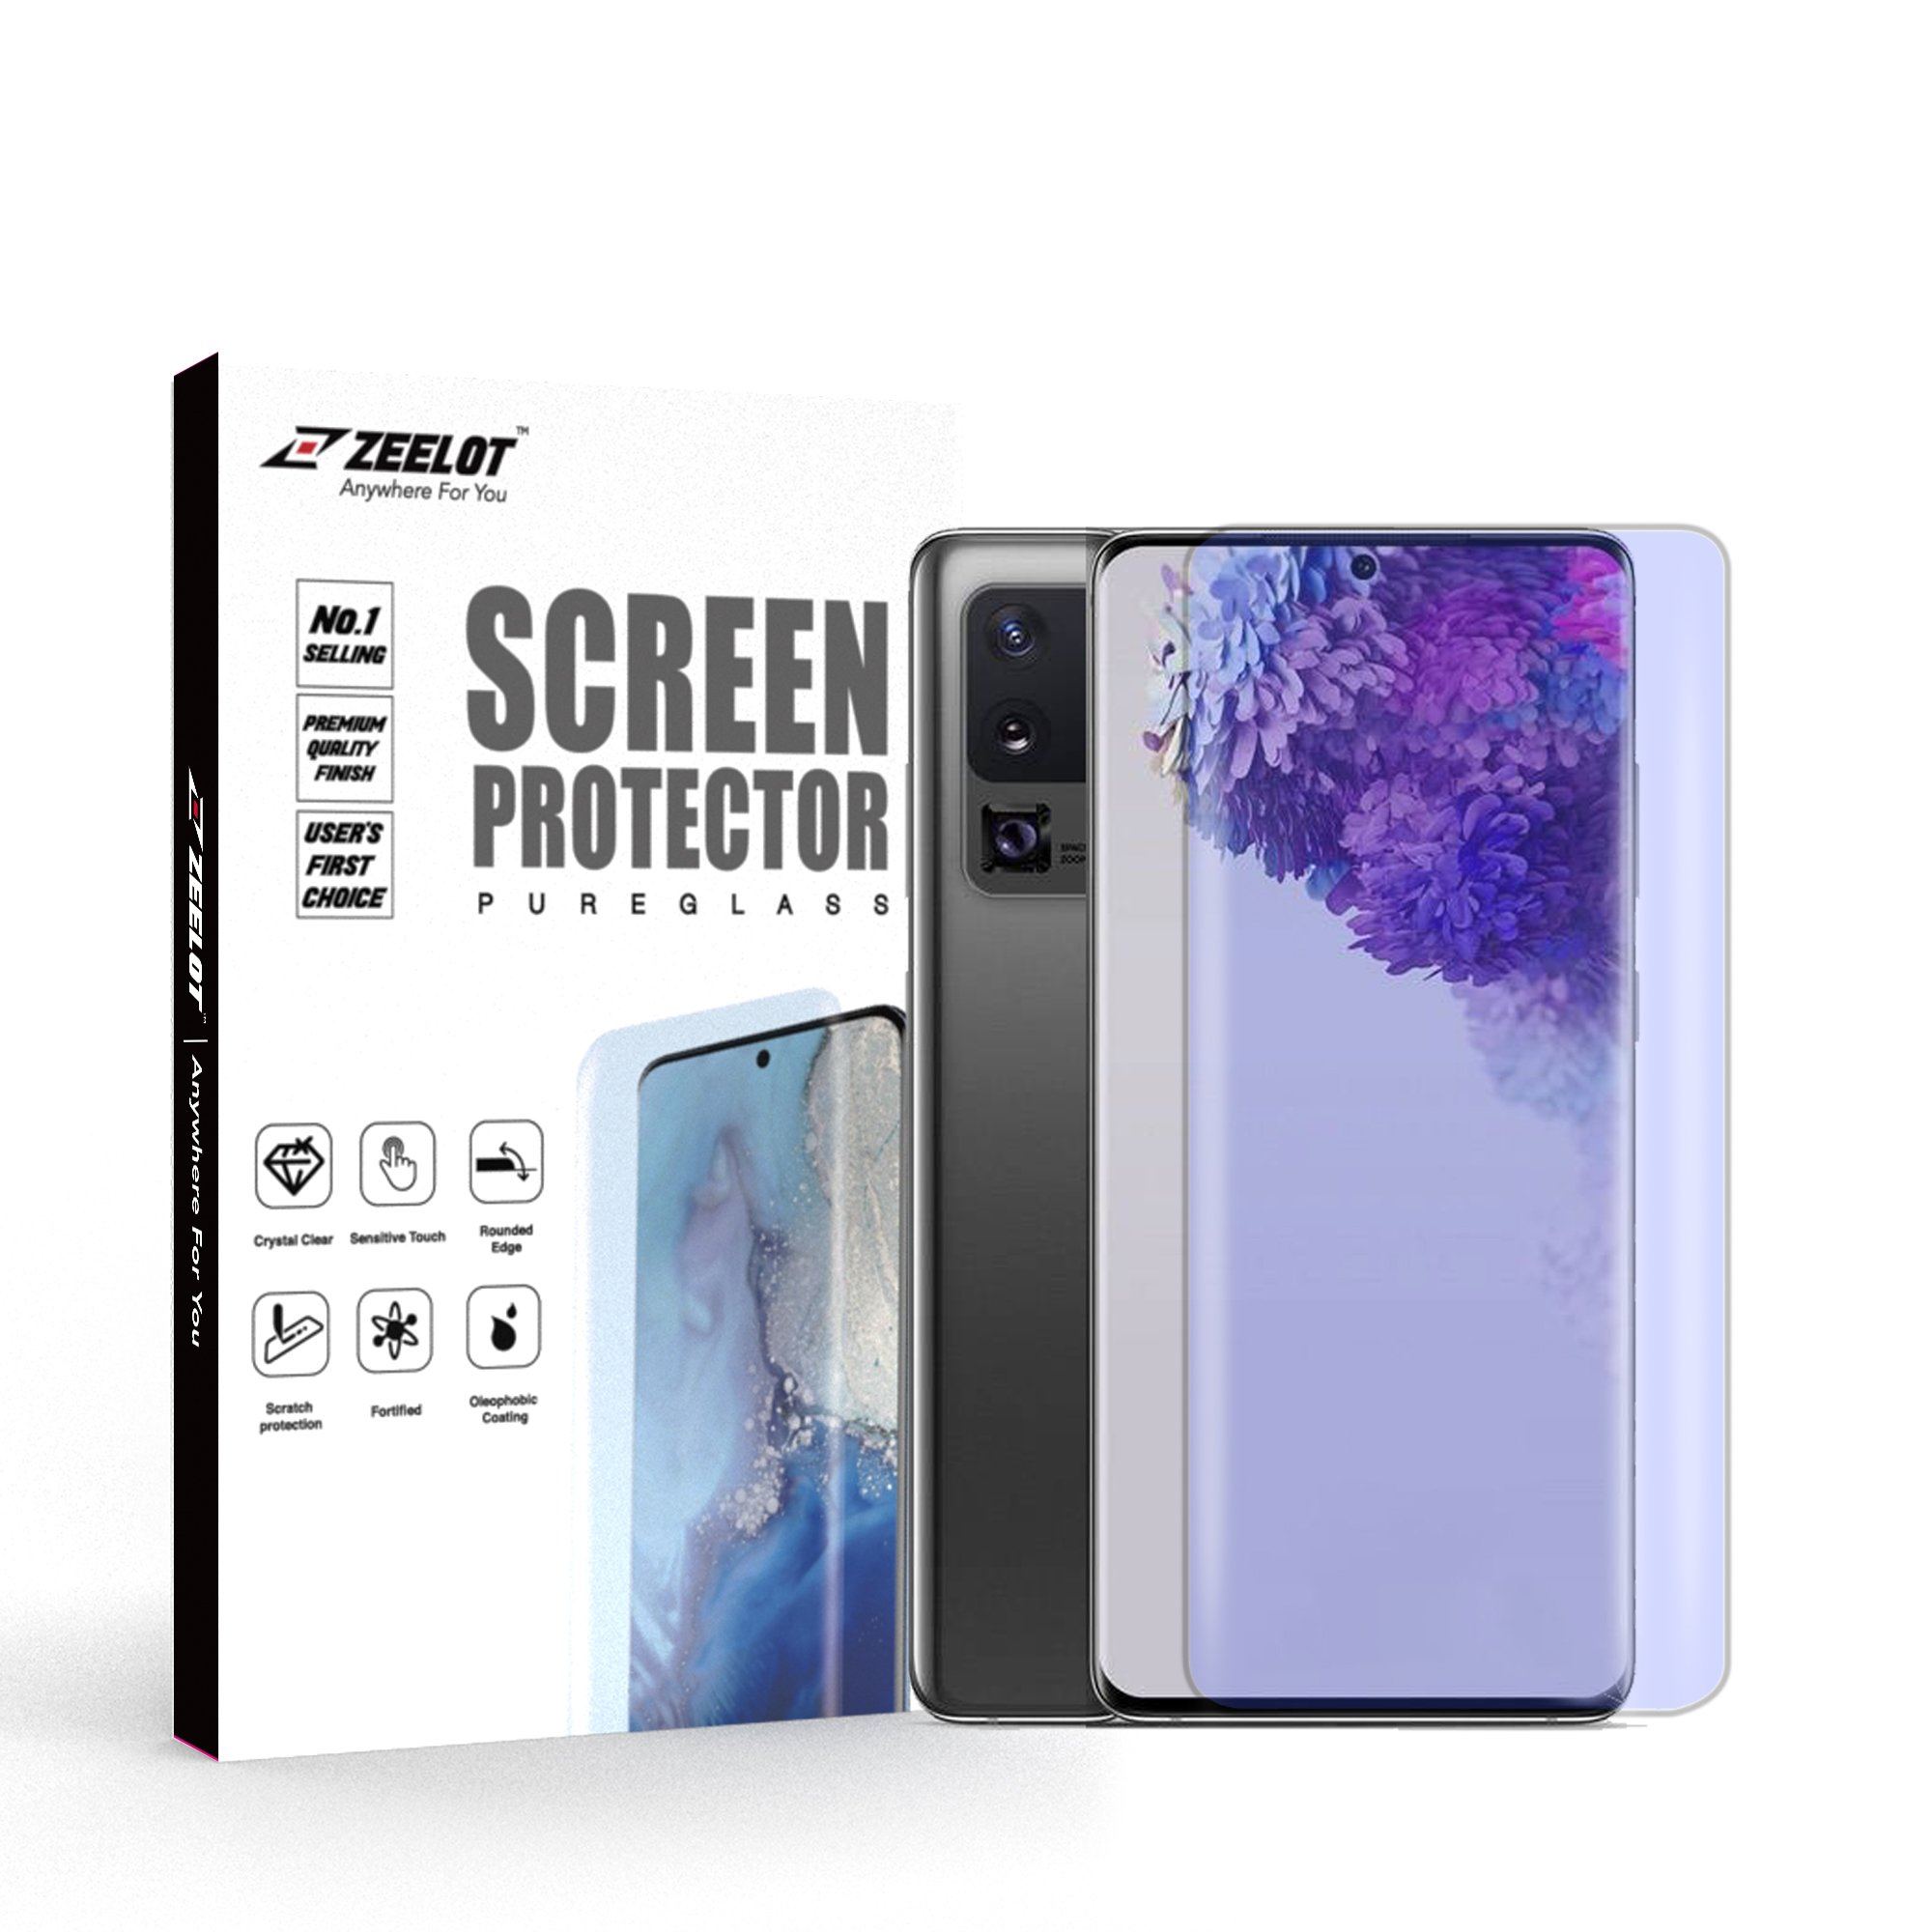 ZEELOT PureGlass 3D LOCA Tempered Glass Screen Protector for Samsung Galaxy S20 Ultra, Anti Blue Ray Anti-Blue Ray Loca Glue ZEELOT 